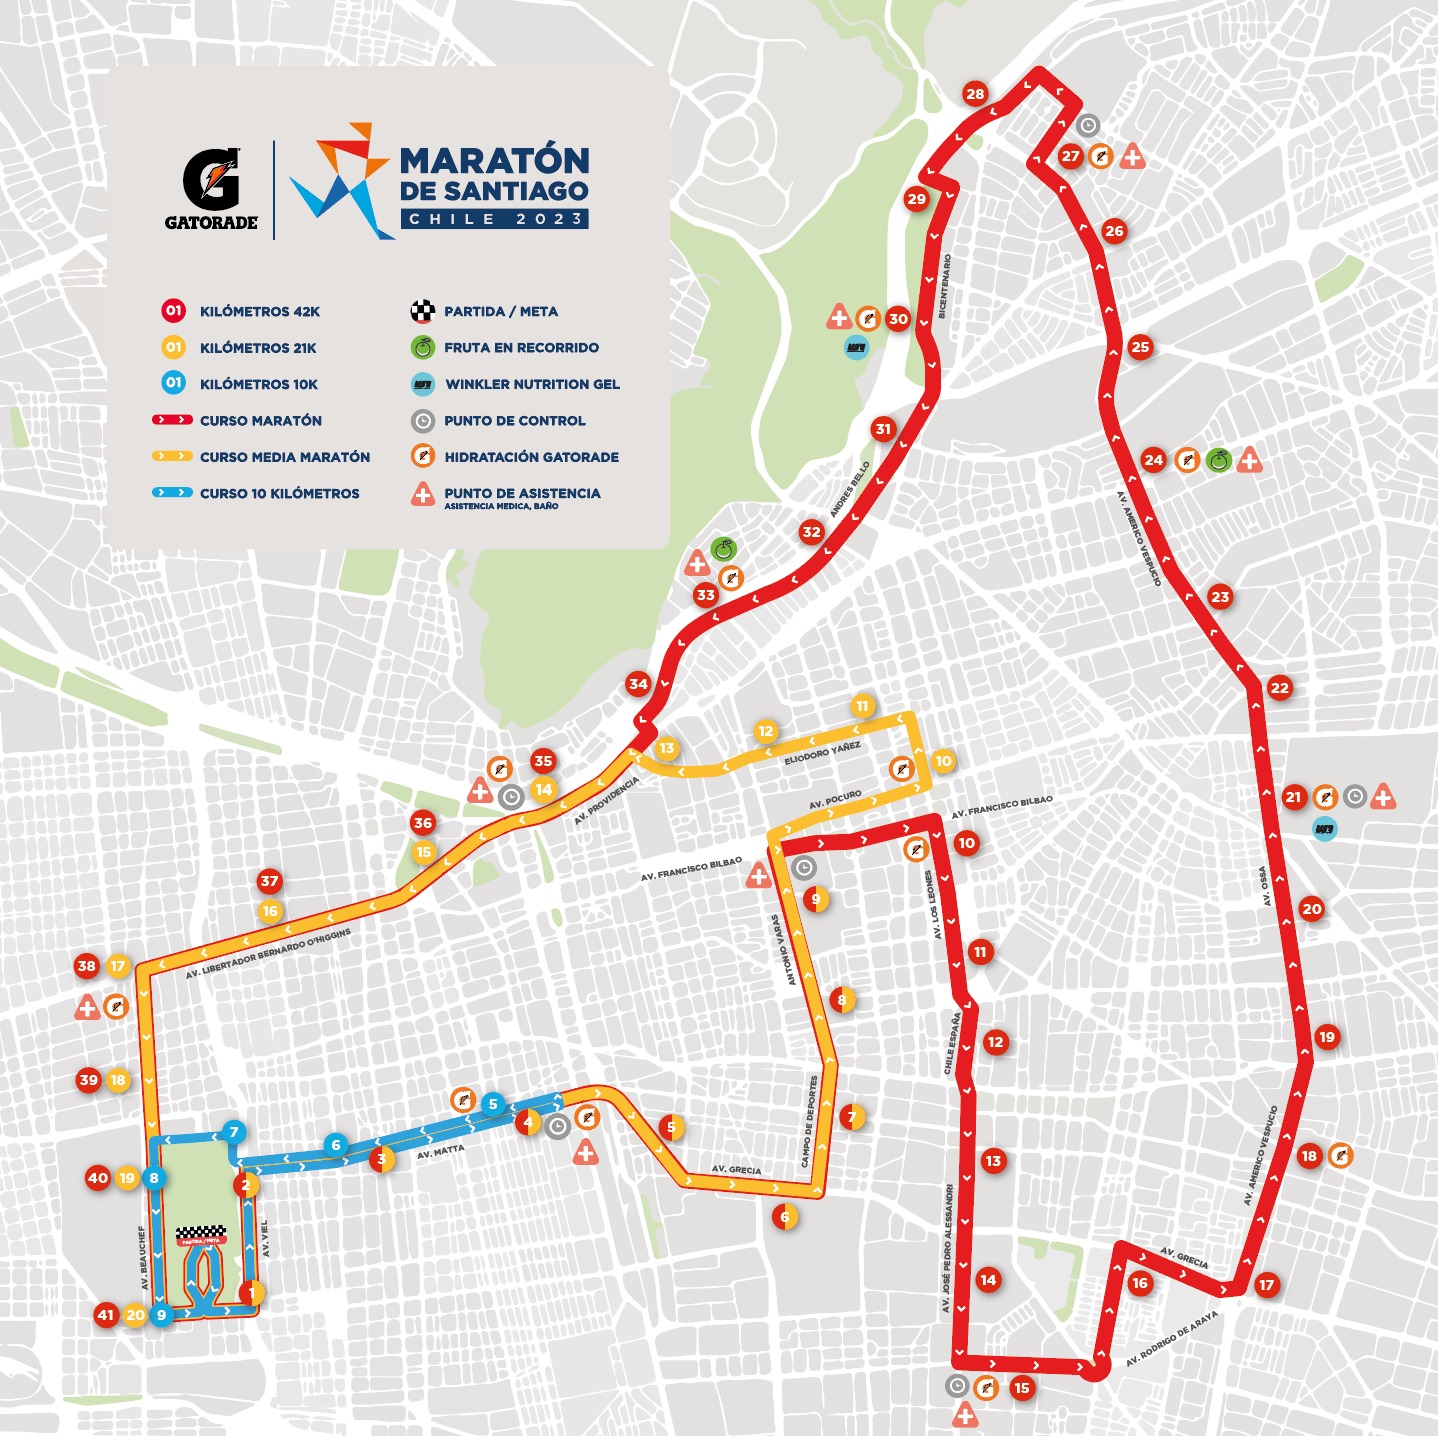 Mapa de la maratón de Santiago de Chile